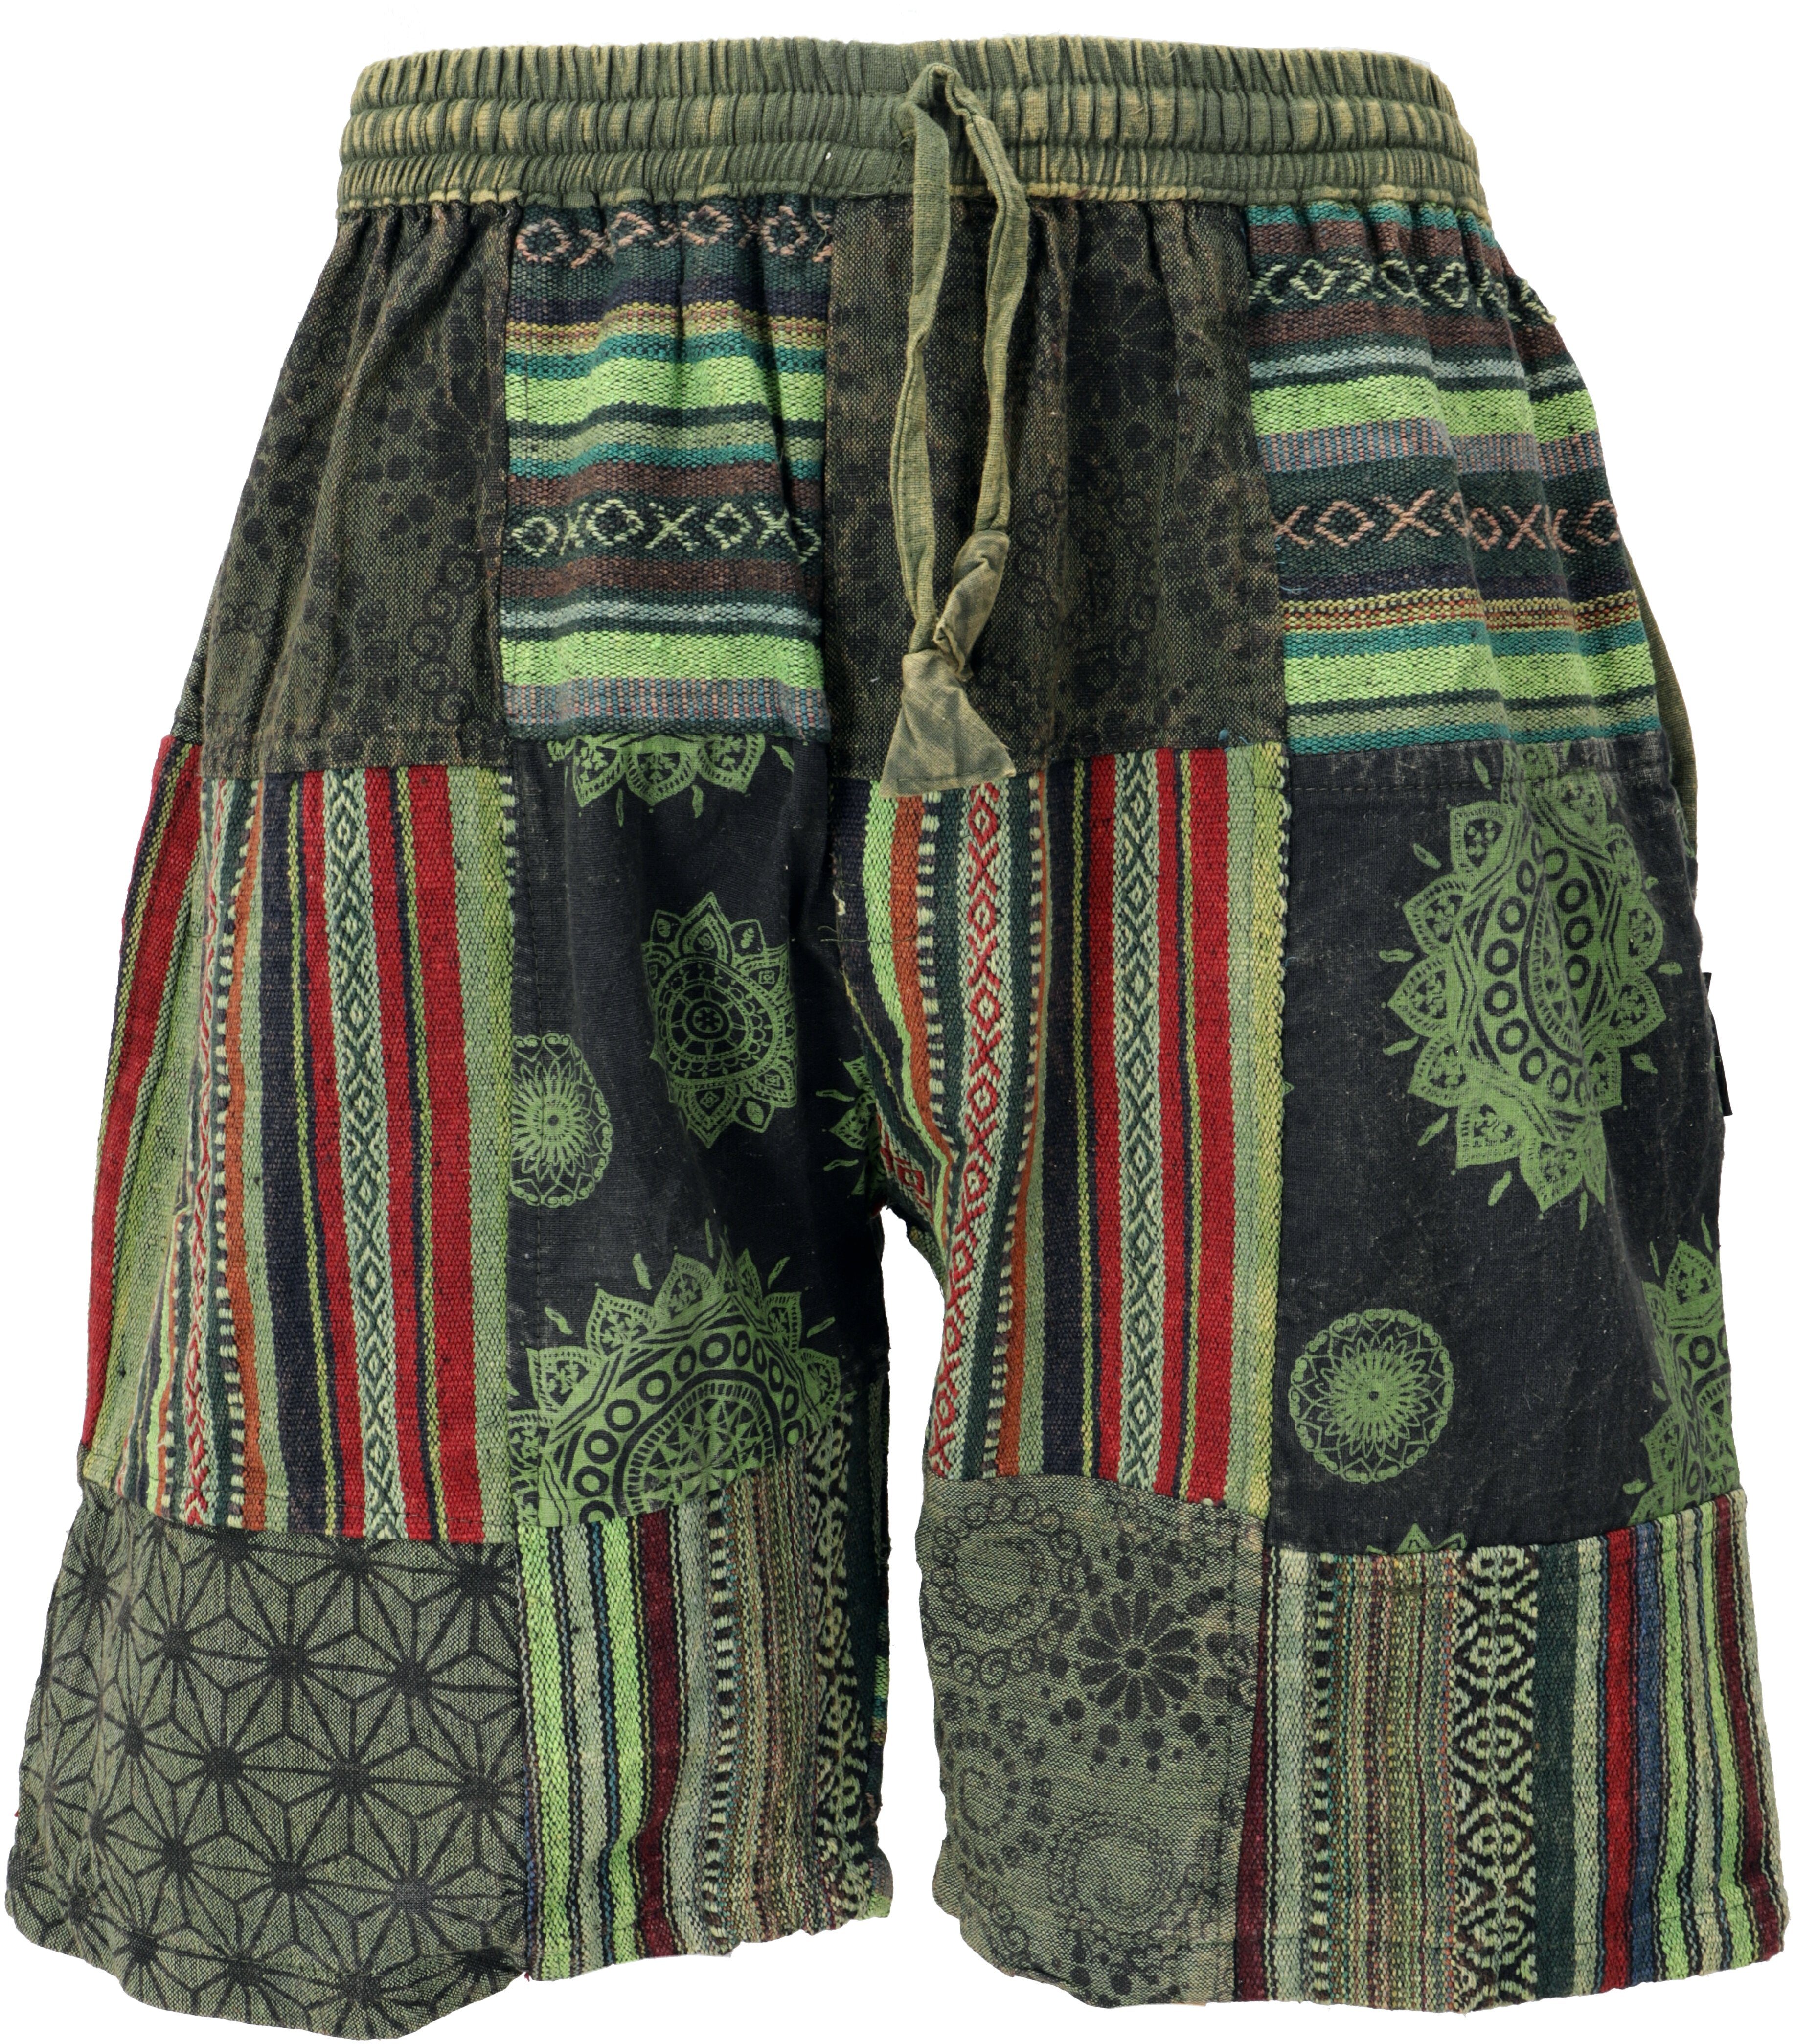 Guru-Shop Relaxhose Ethno Yogashorts, Patchwork Shorts - grün Hippie, Ethno Style, alternative Bekleidung